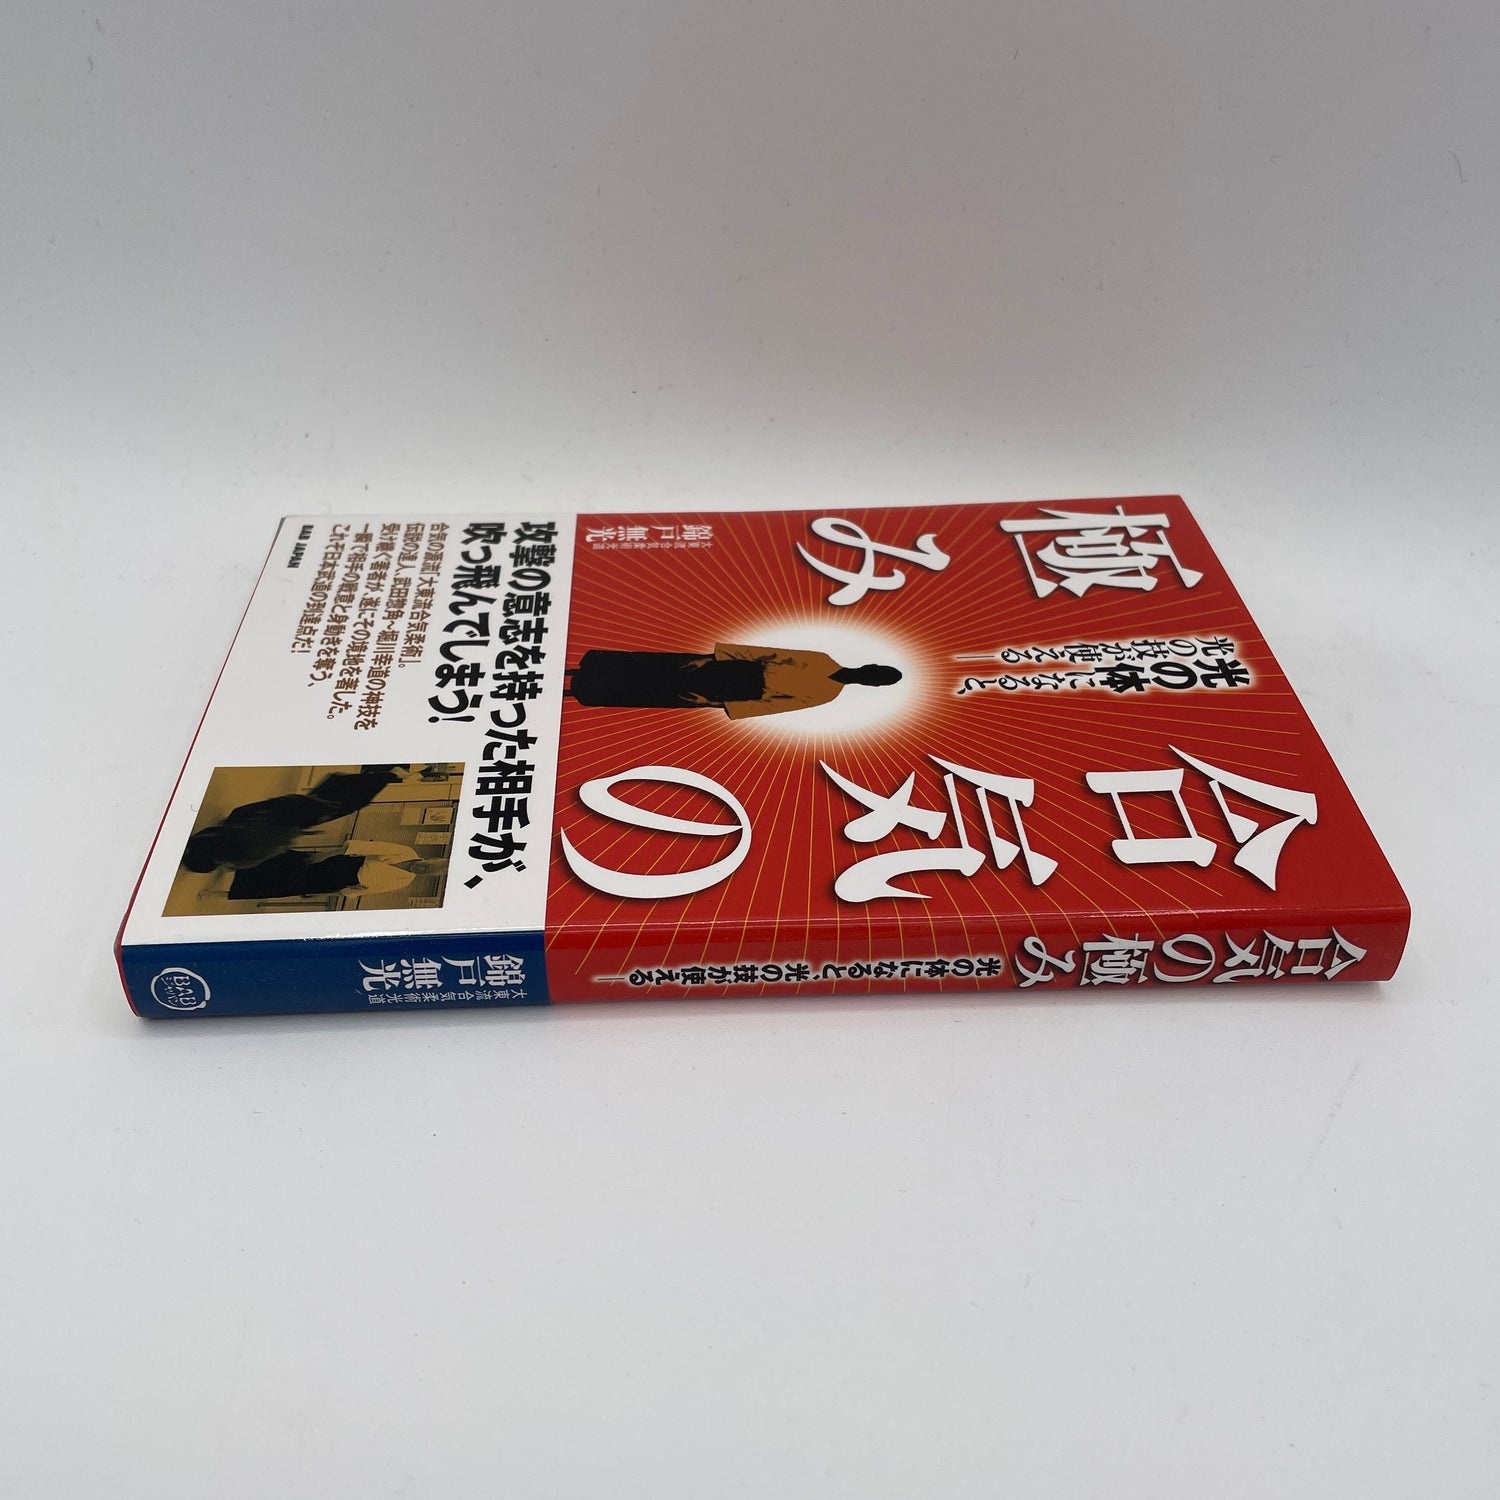 Aiki no Kiwami Book by Takeo Nishikido